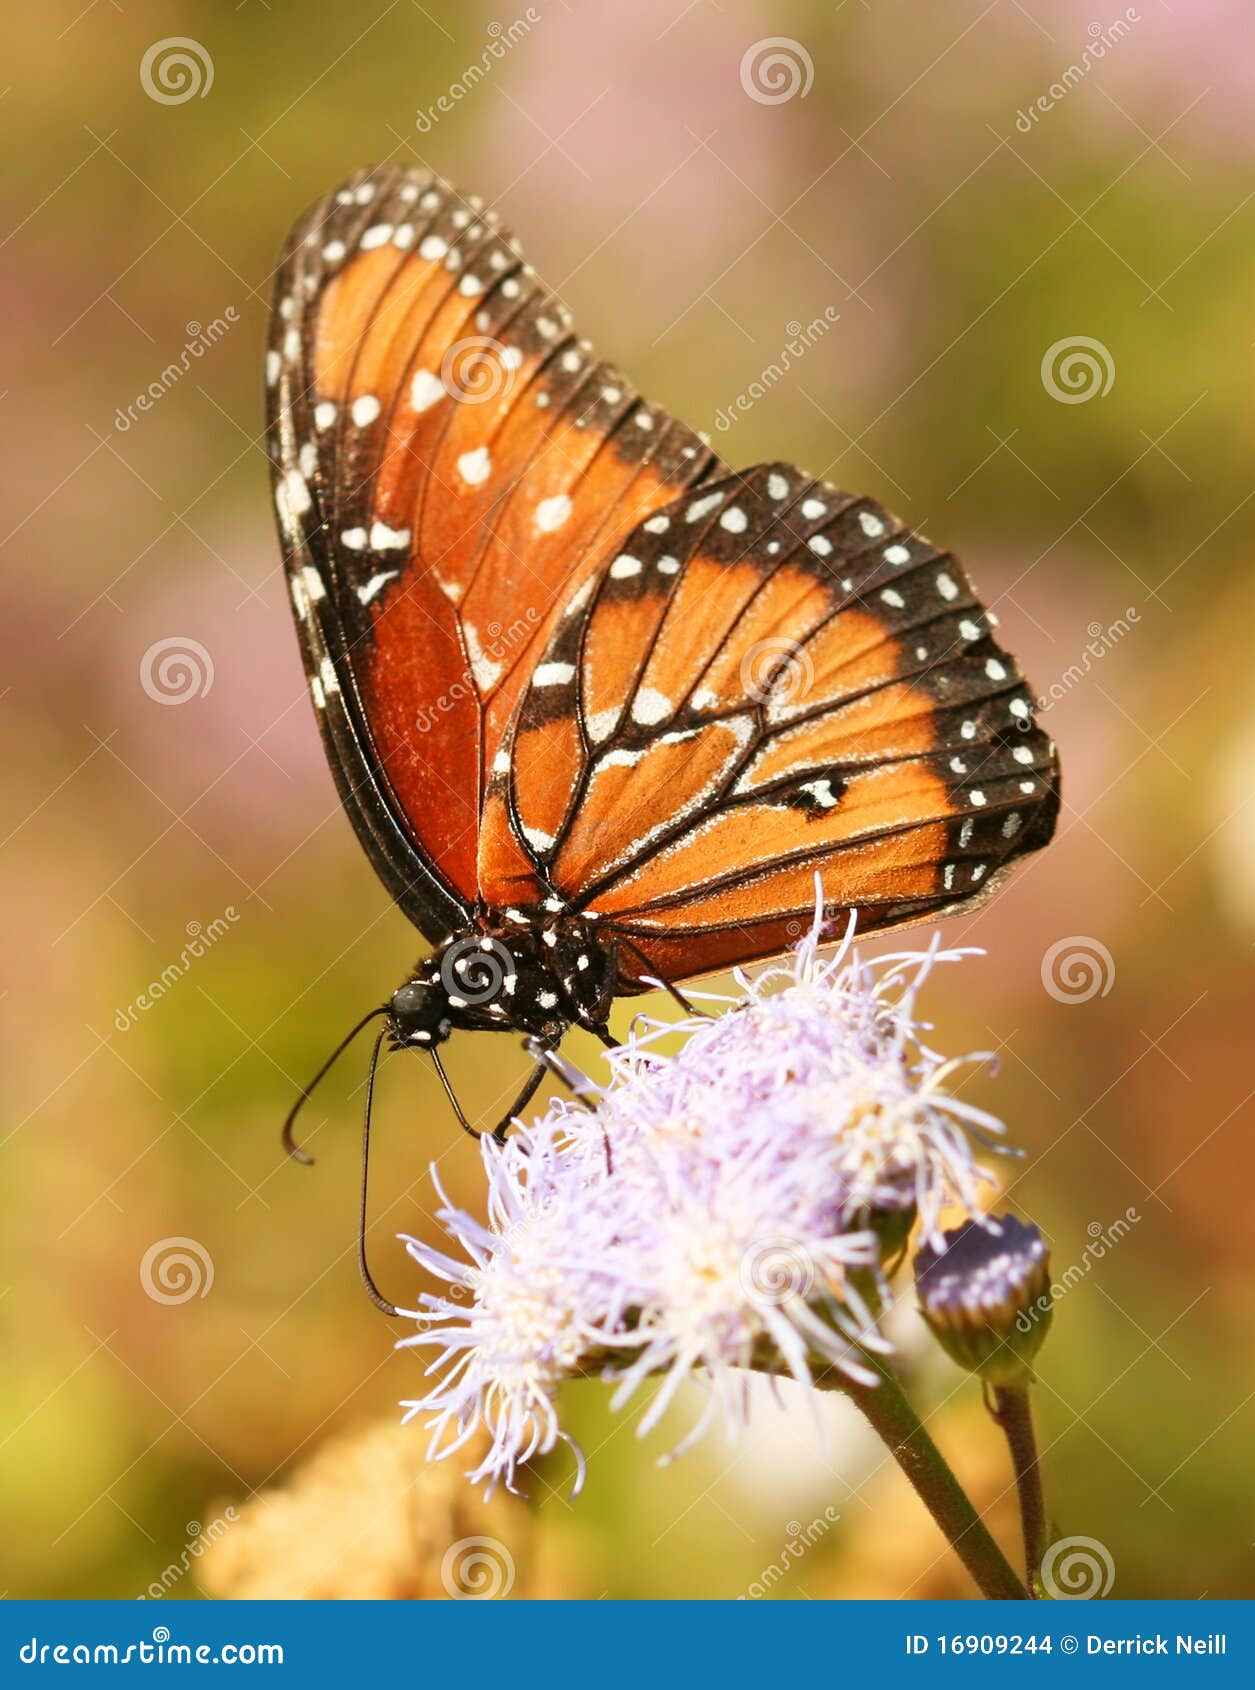 a viceroy butterfly, a monarch mimic